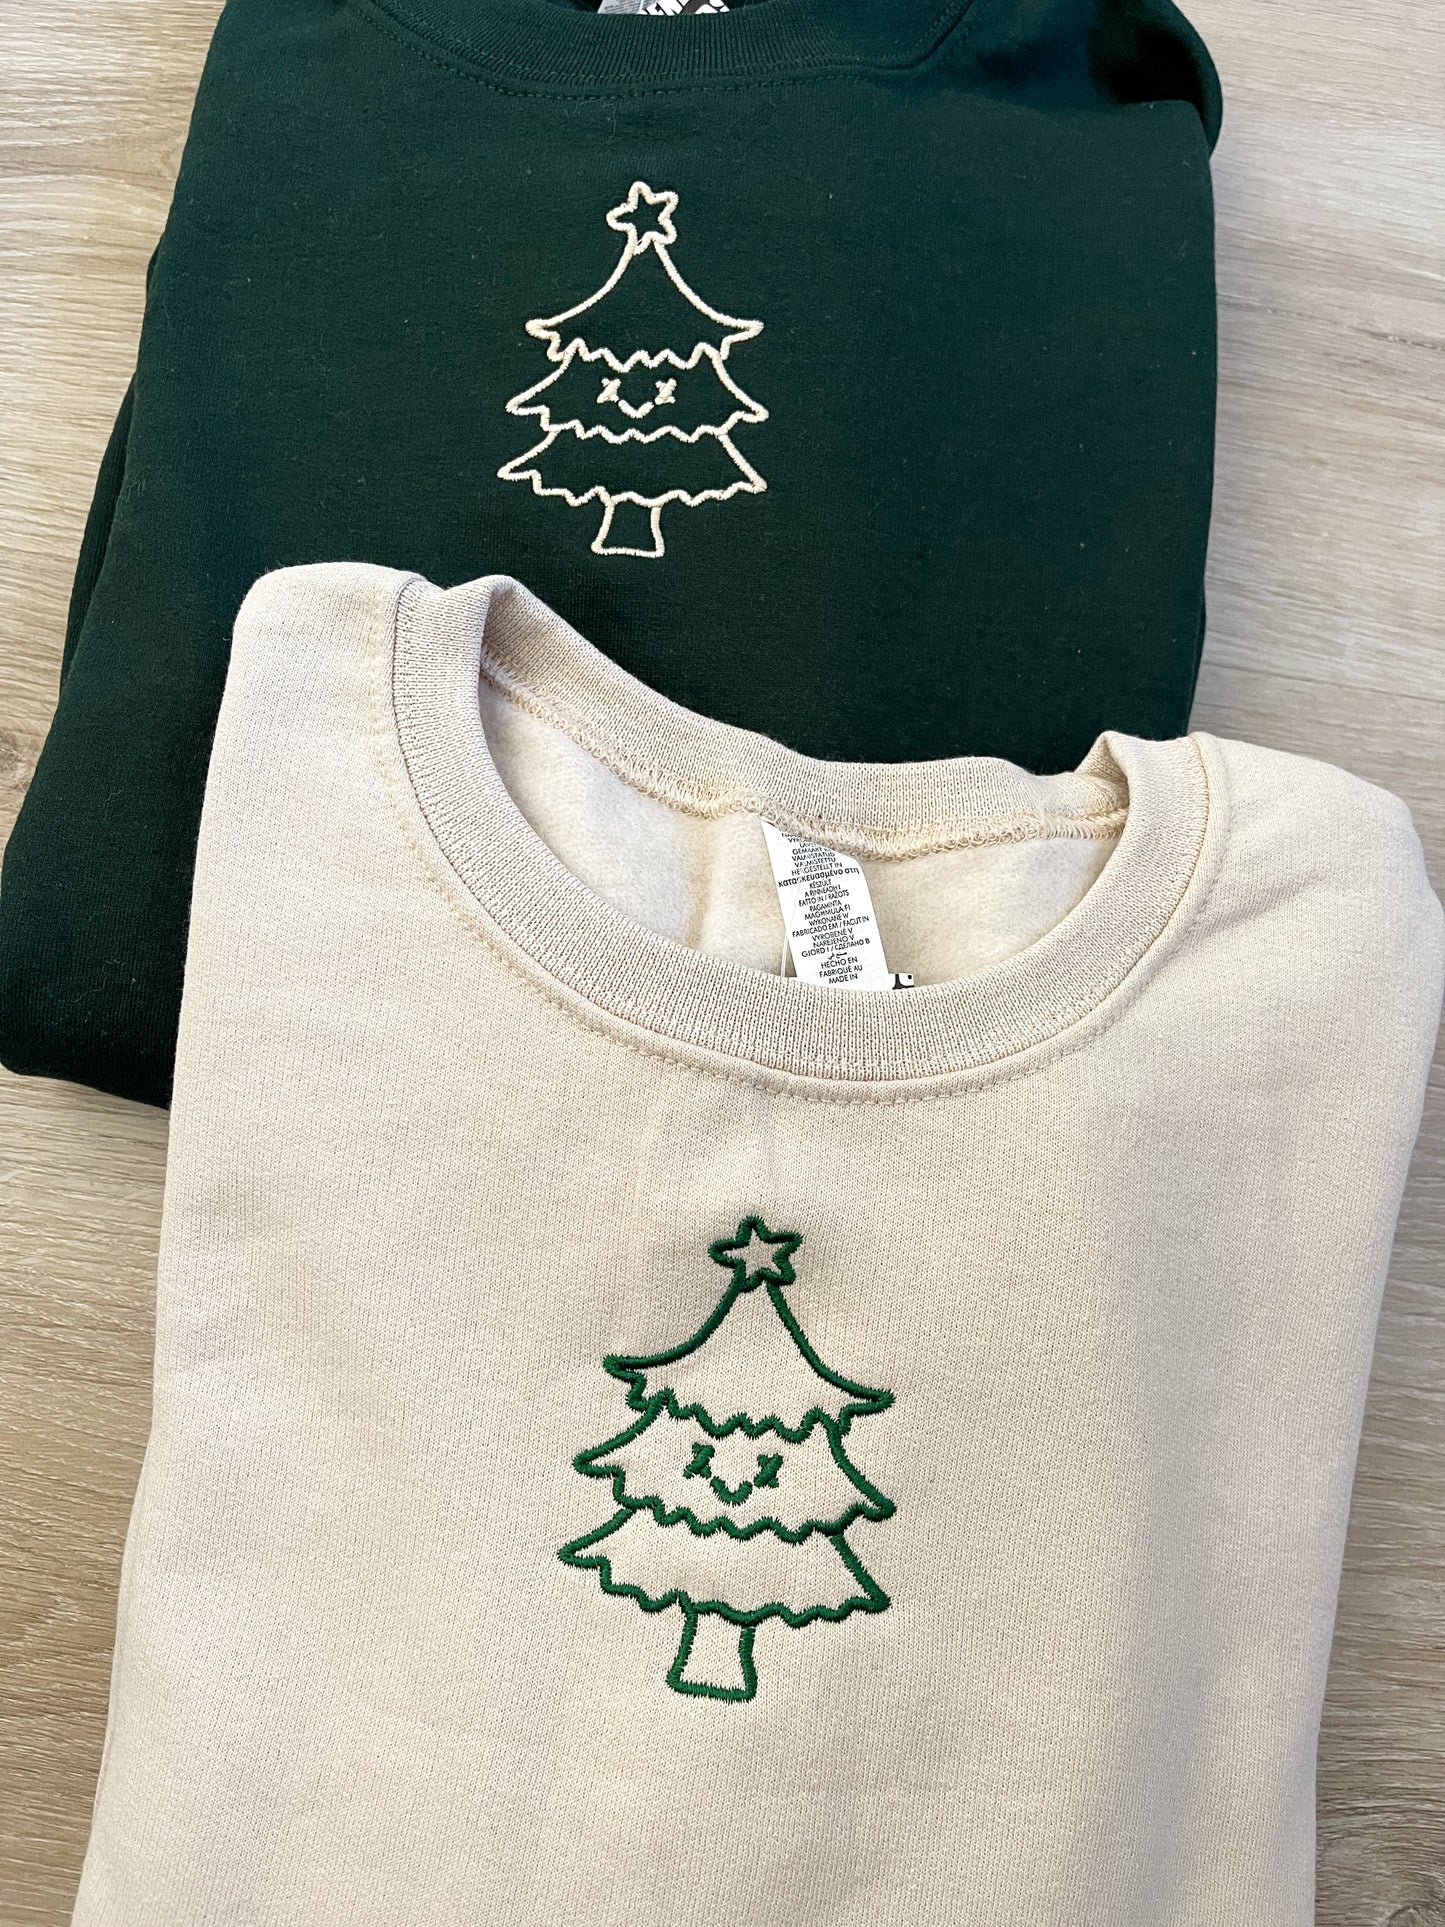 Christmas Tree Embroidered Matching Set